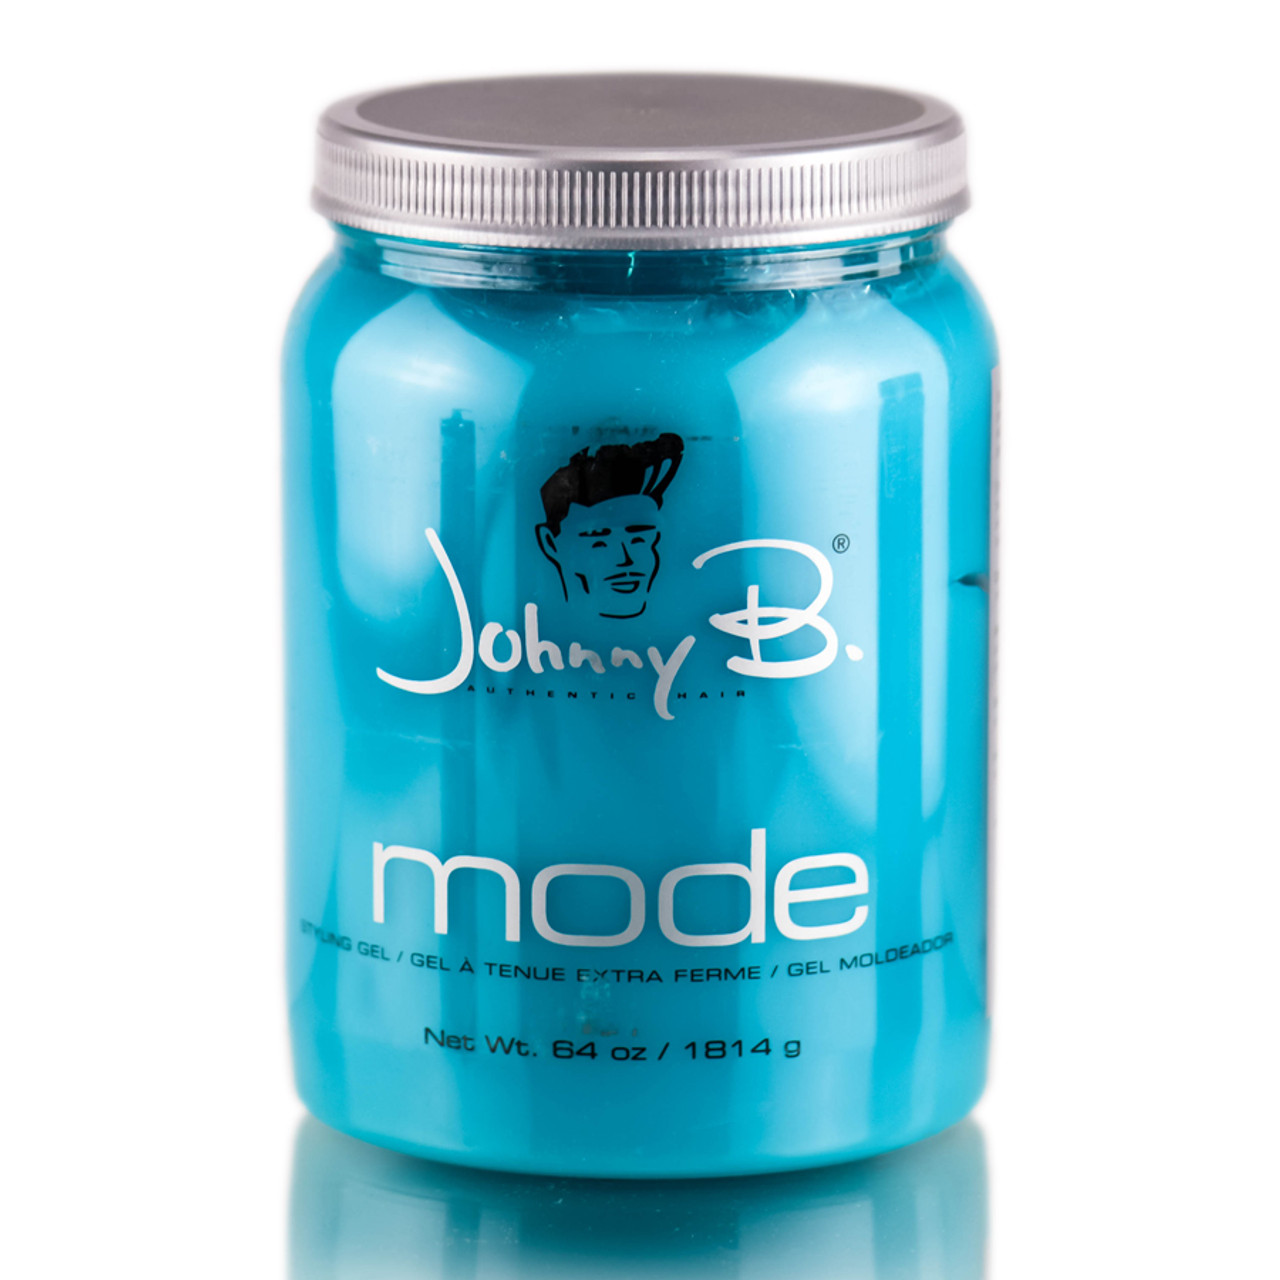 Johnny B Mode Styling Gel 16 OZ, 1 - Food 4 Less